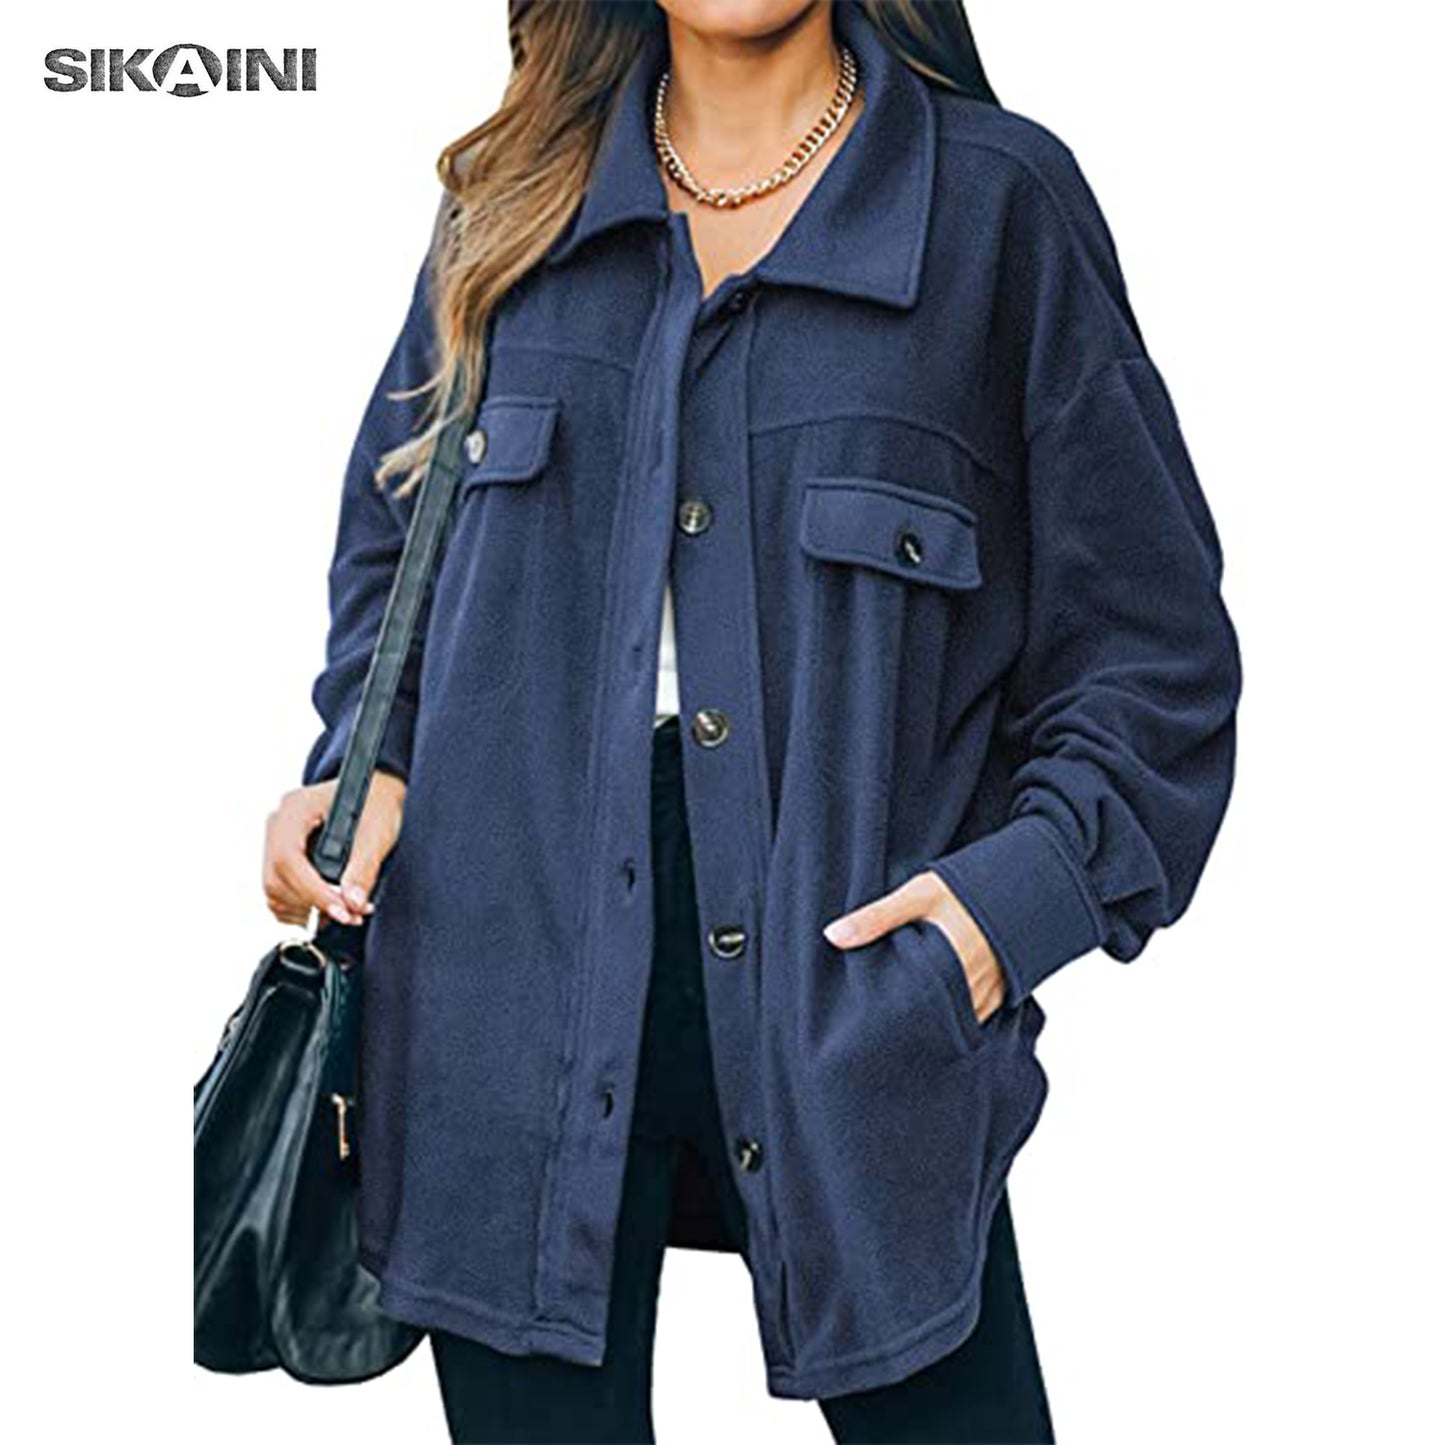 SIKAINI Women Casual Coat Long Sleeve Shacket Jacket with Pockets